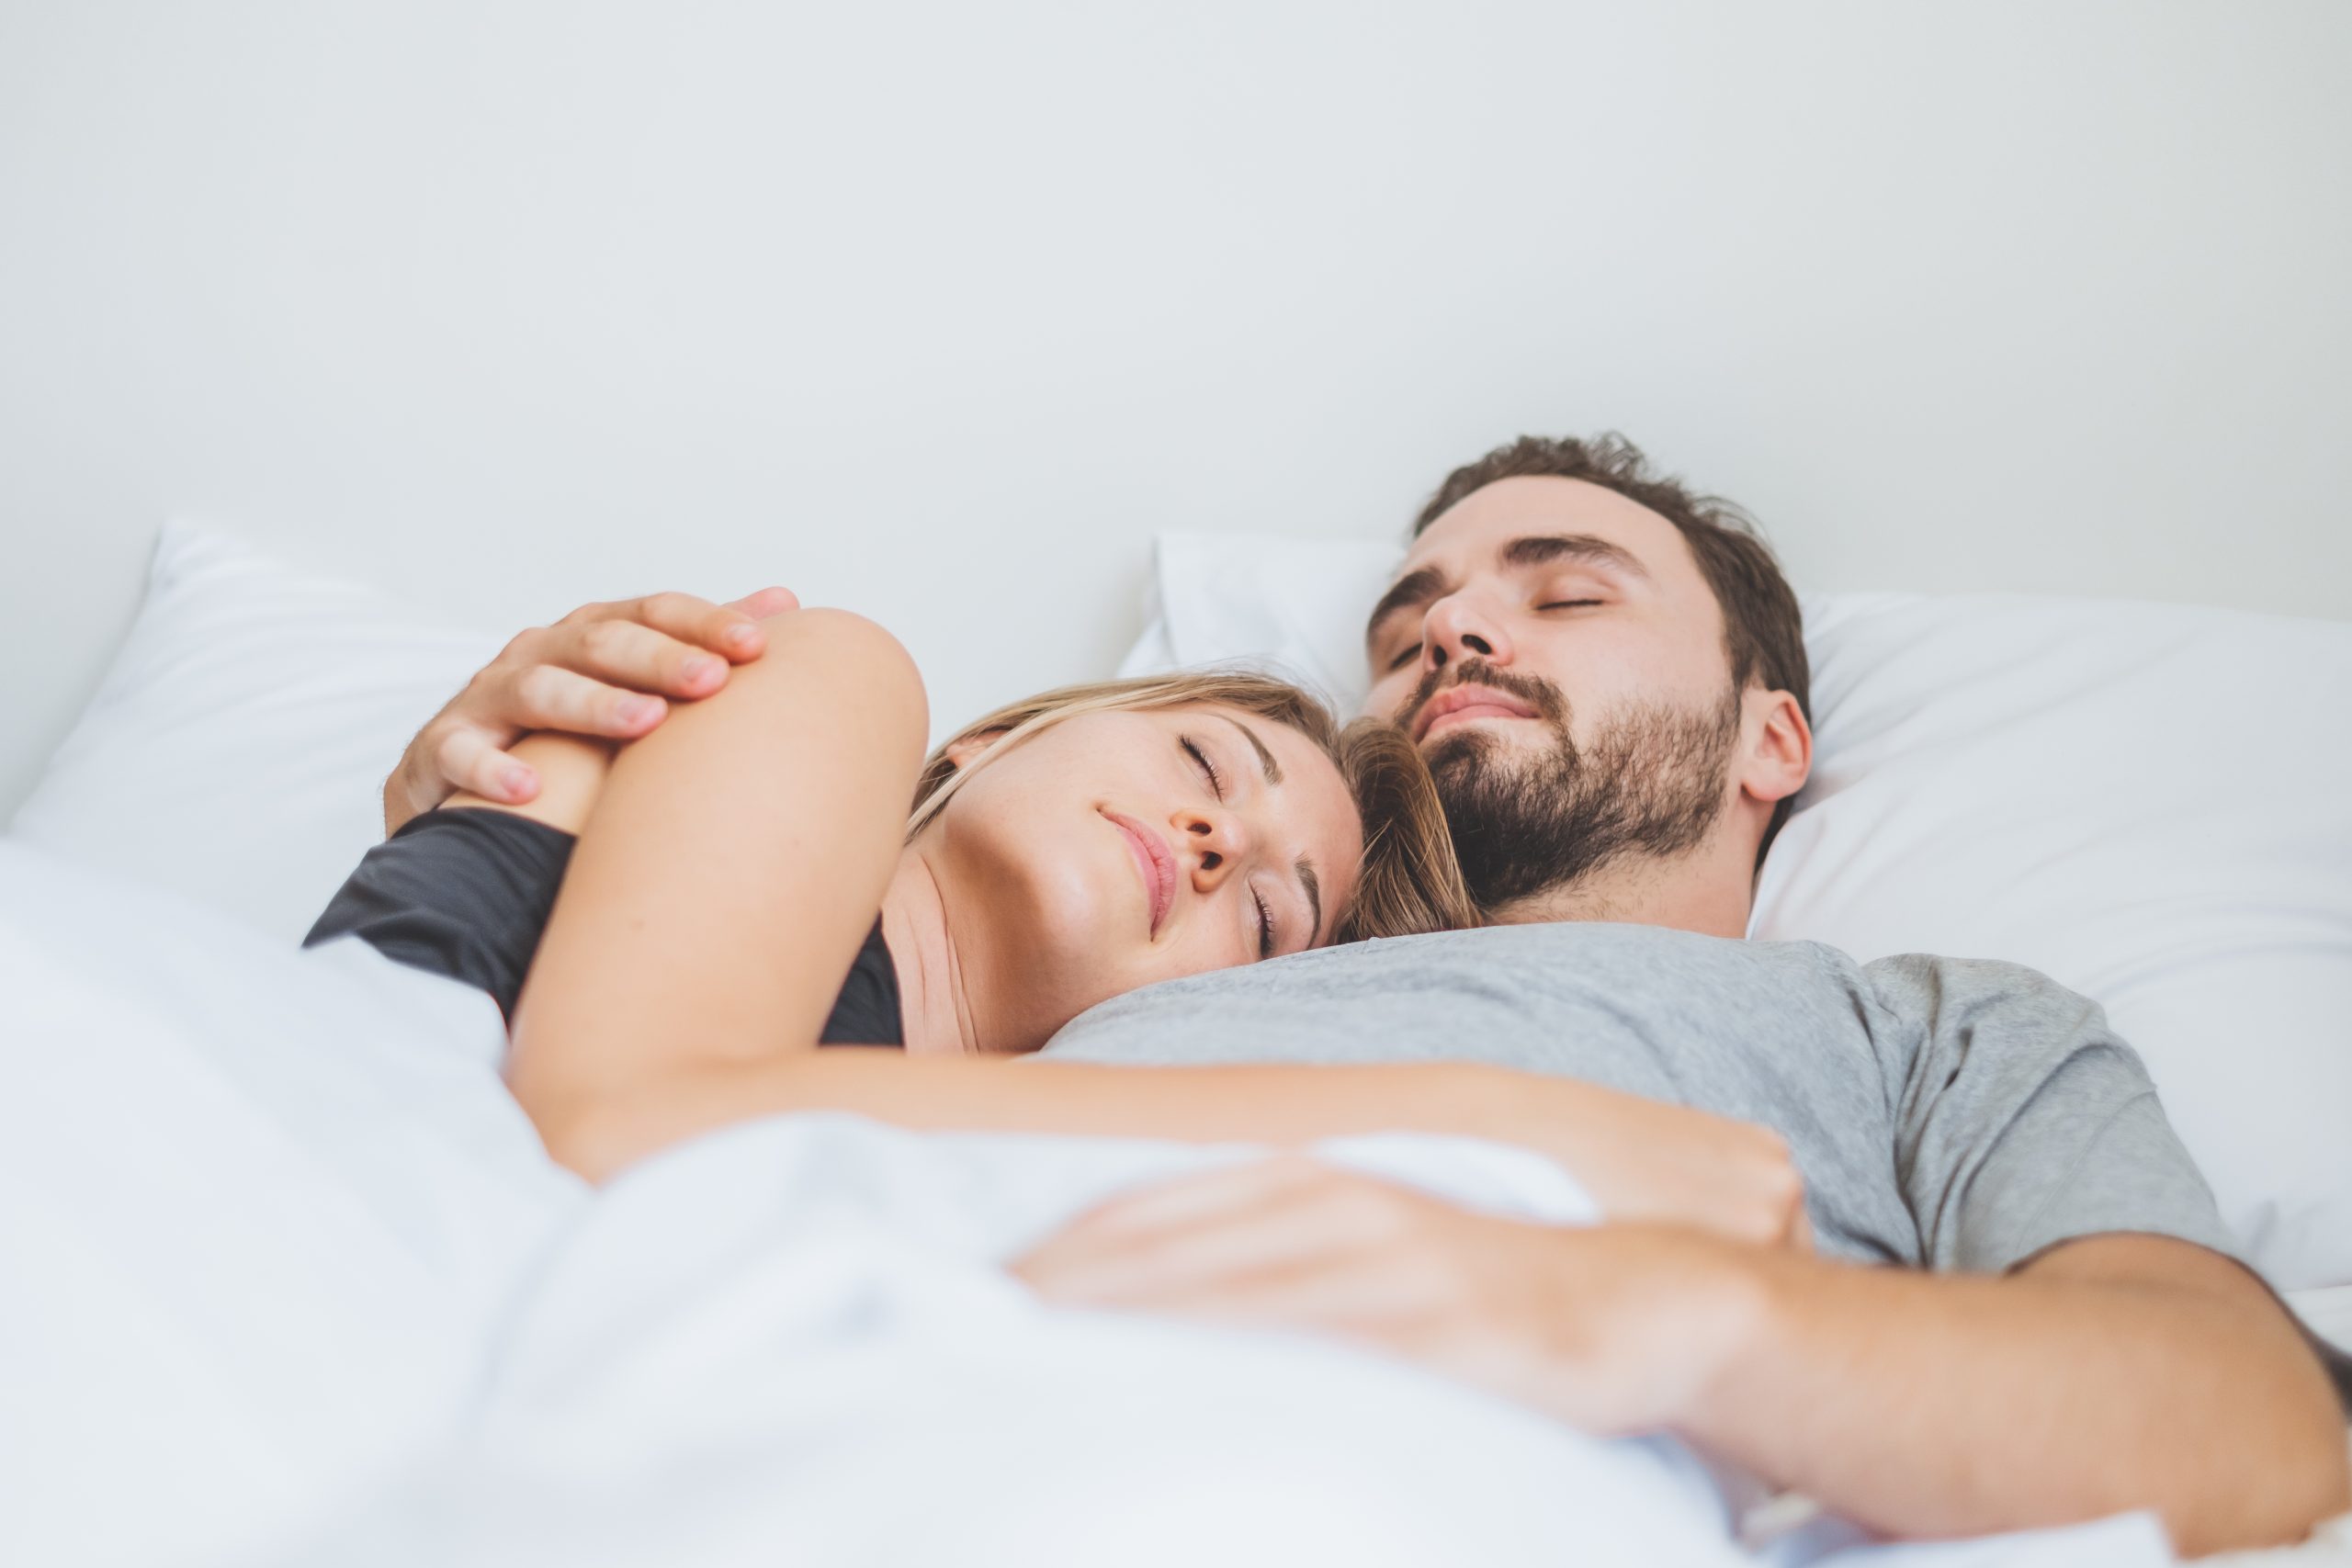 Sleeping together has surprising benefits - Wel.nl